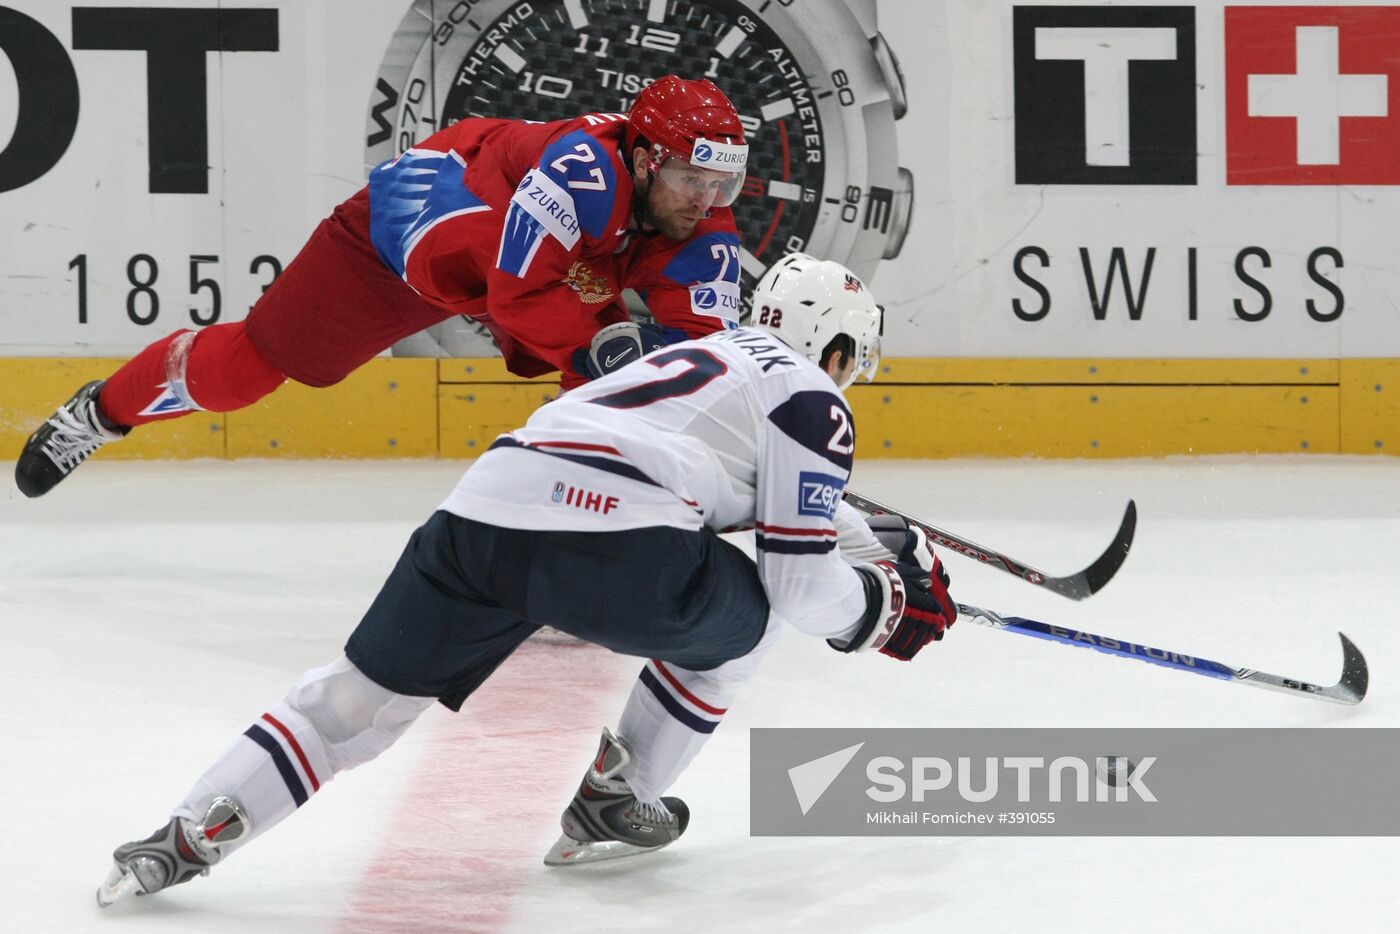 2009 Ice Hockey Championship. Russia vs. USA 4 - 1